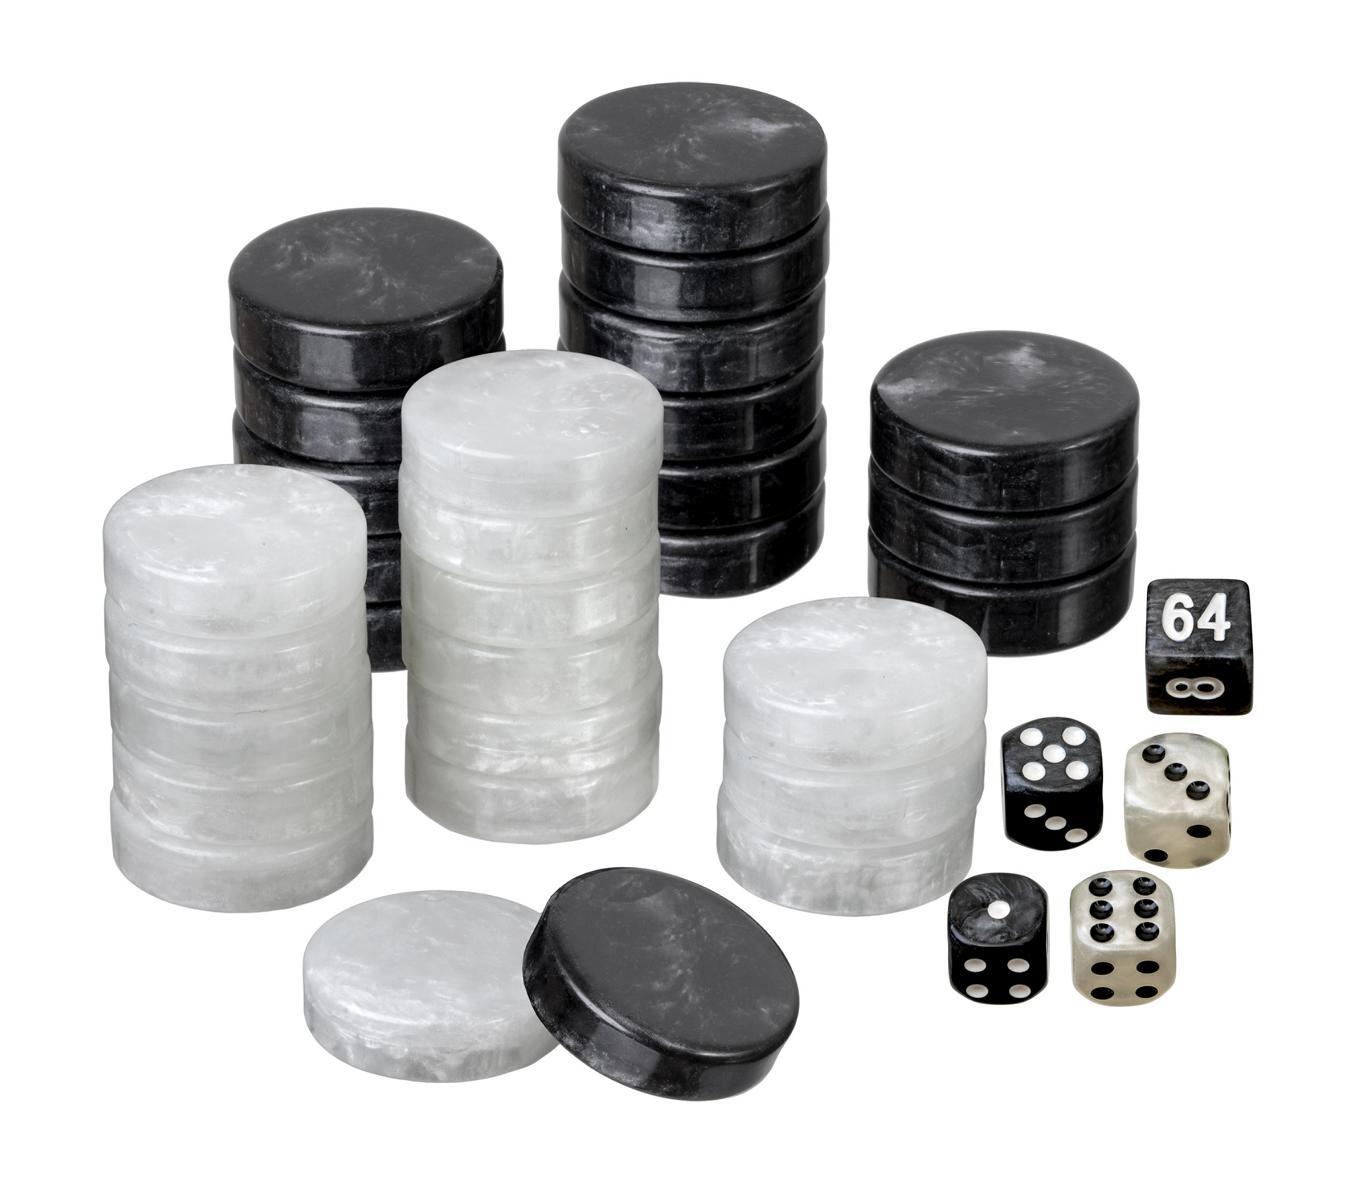 Spielsteine, Backgammon, groß, 34 x 10 mm, Kunststoff, schwarz weiß, inkl. Würfel